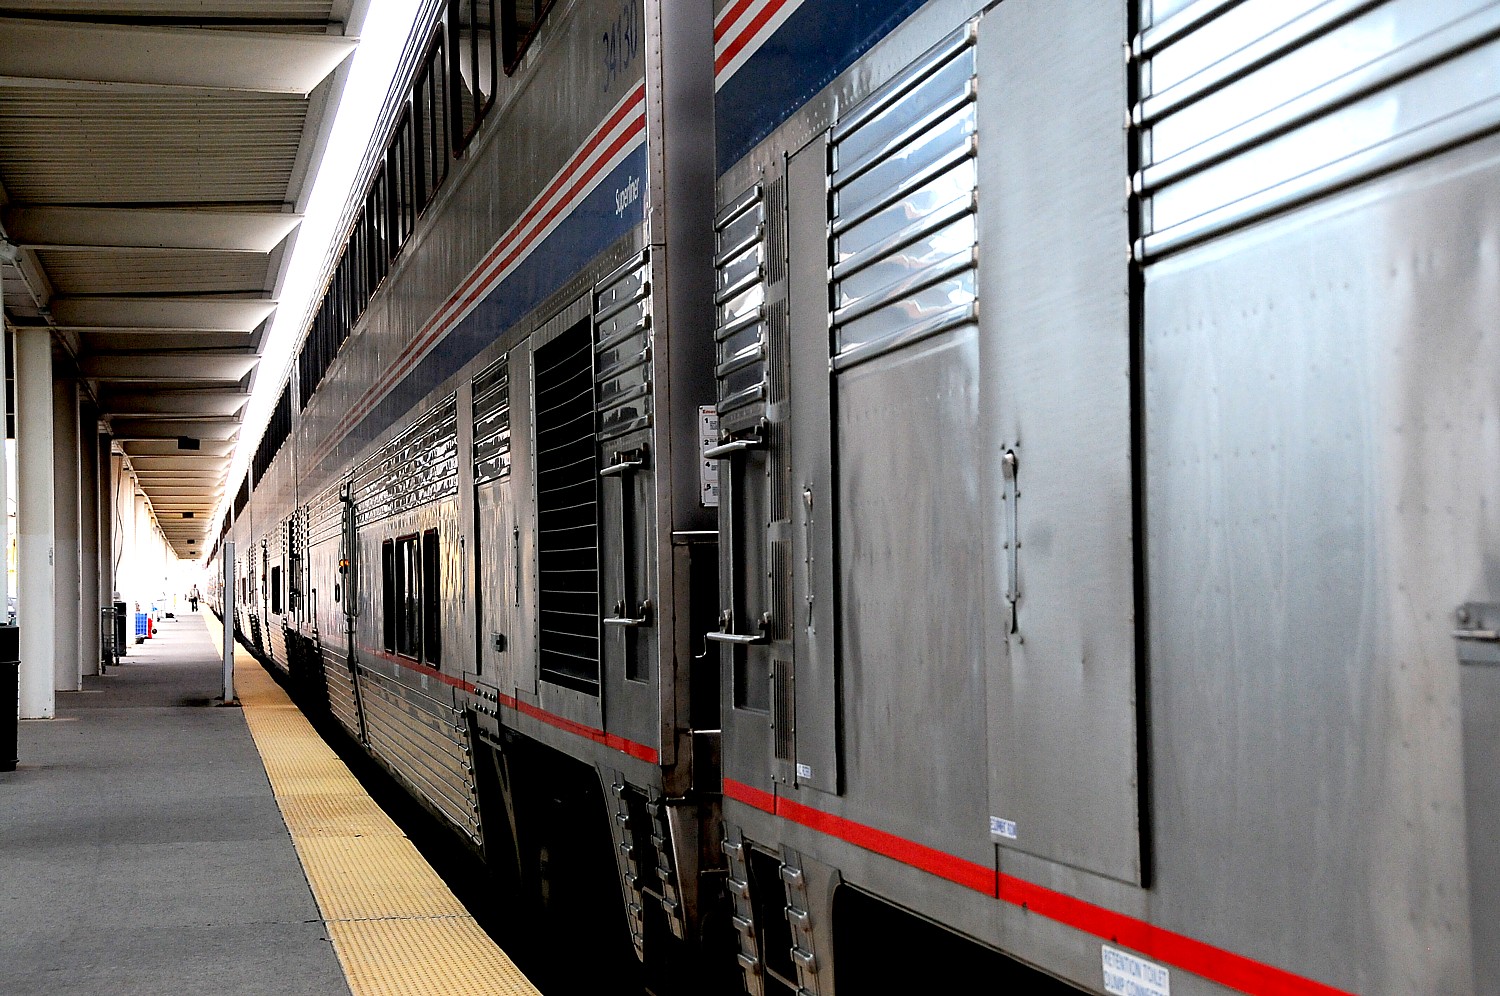 Biden administration announces $1.4 billion to improve rail safety